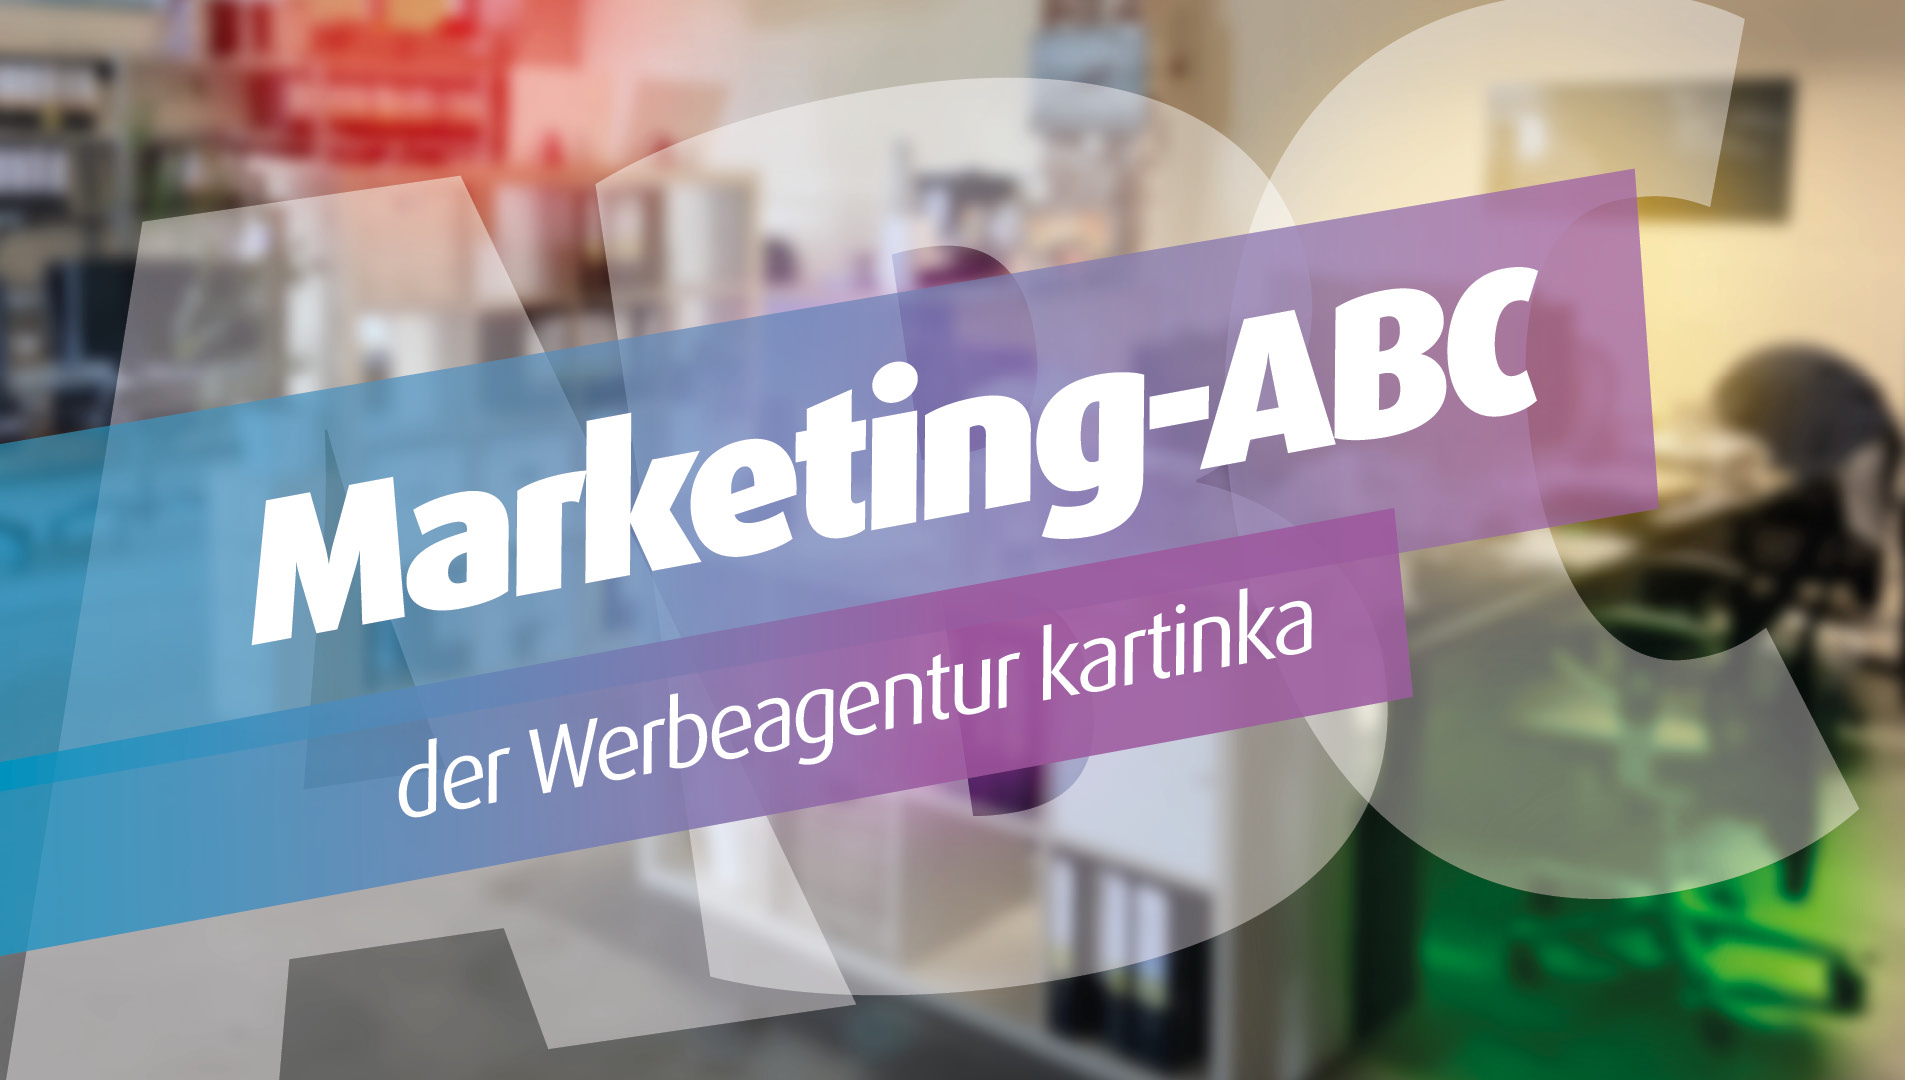 kartinka_marketing_abc